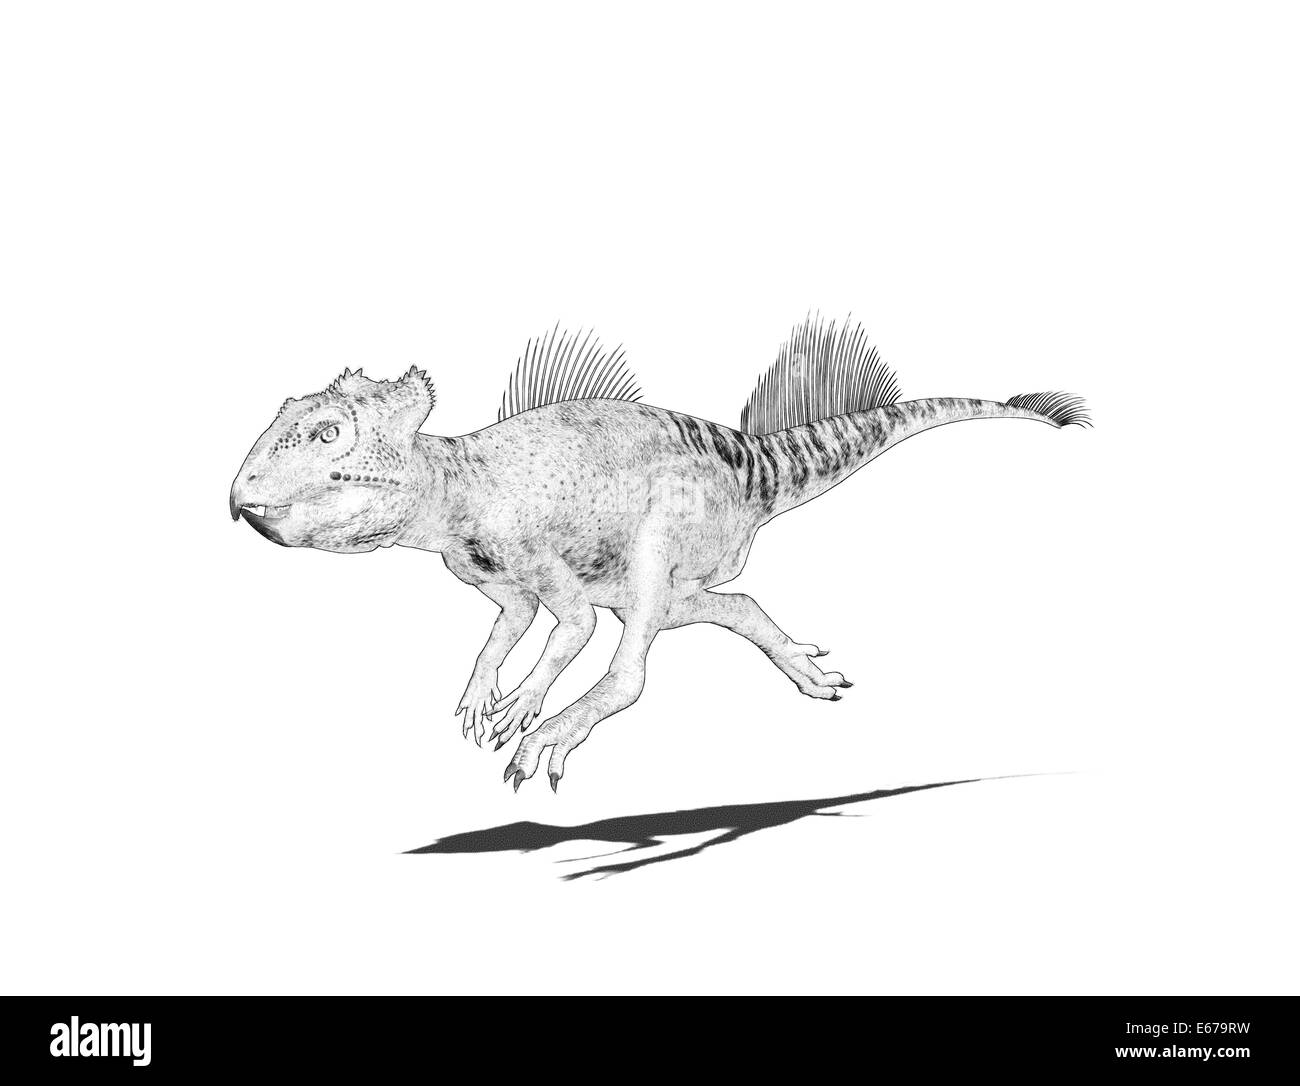 Dinosaurier Archaeoceratops / dinosaur Archaeoceratops Foto Stock